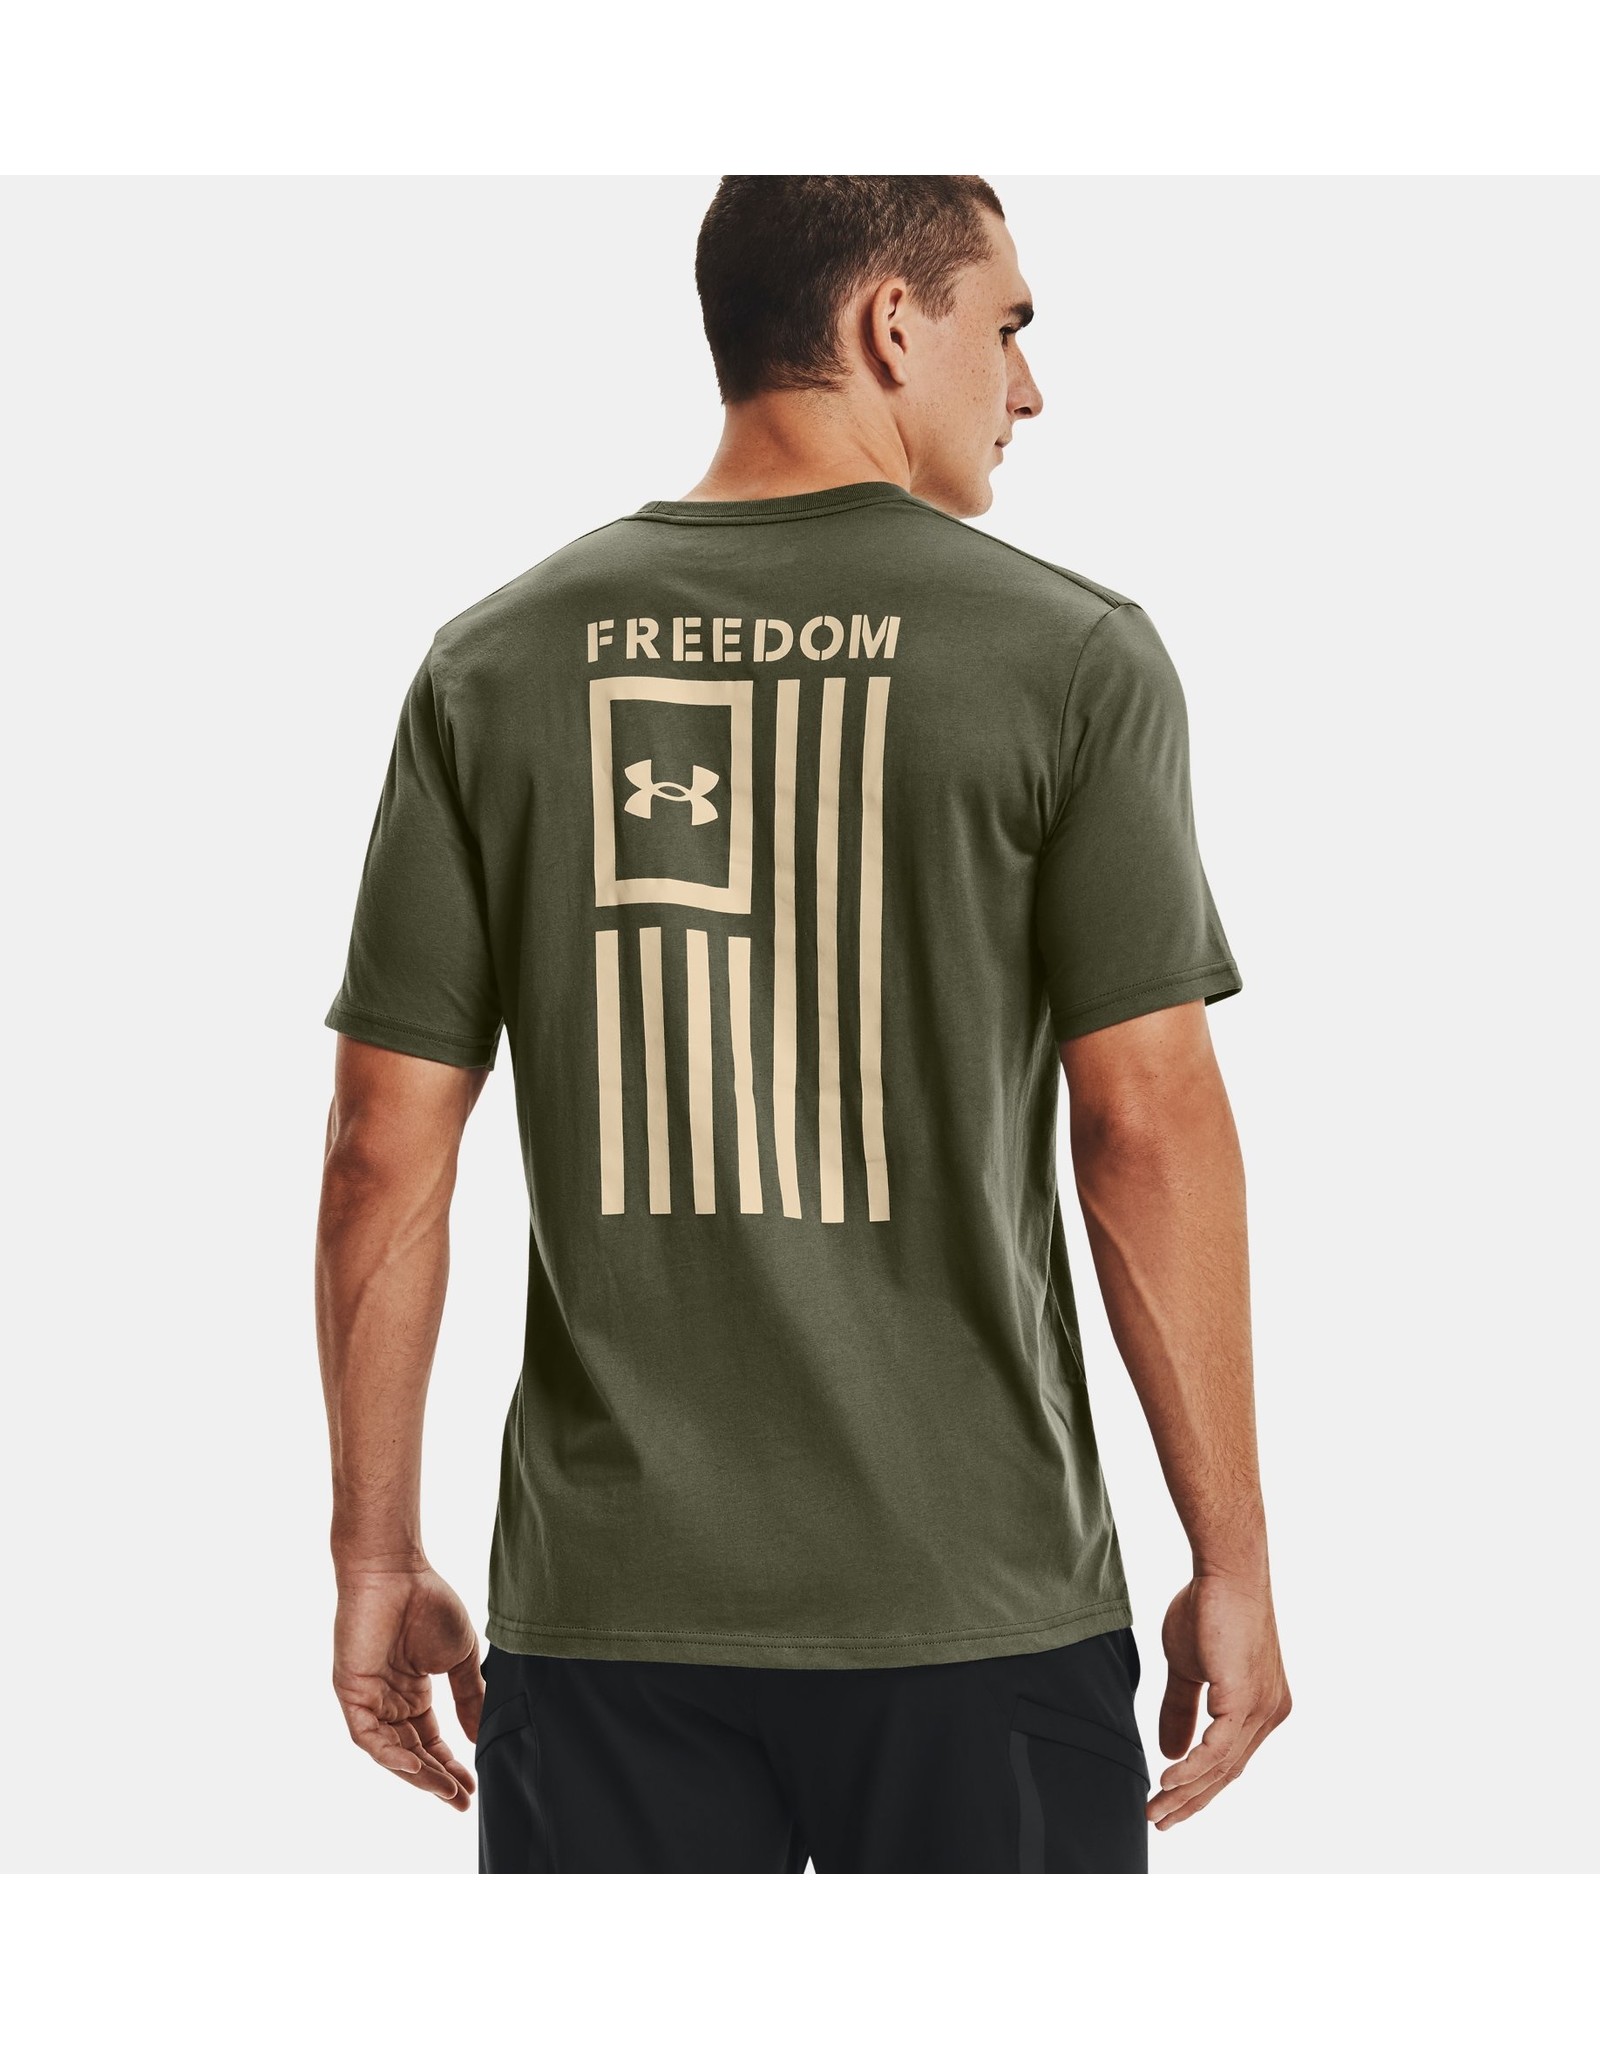 Under Armour - Mens Freedom Flag T-Shirt